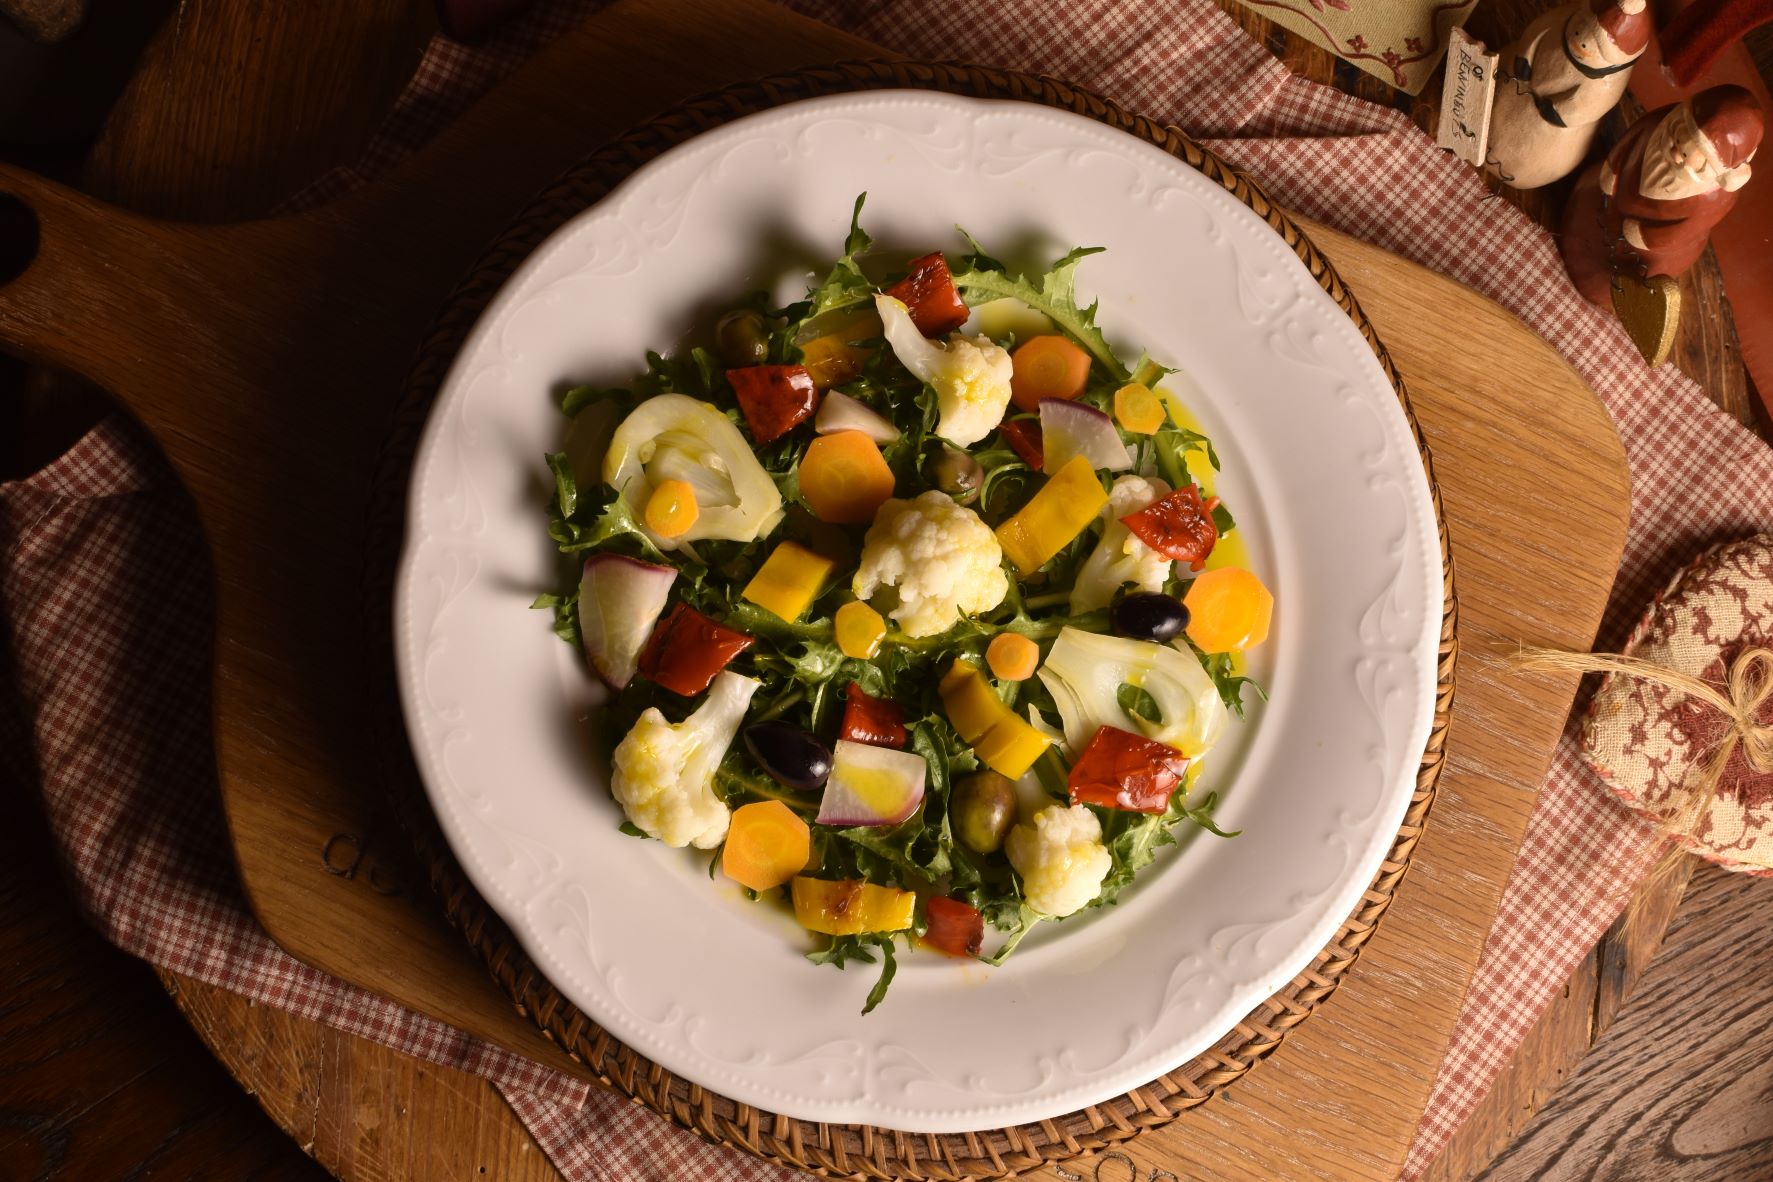 Neapolitan Christmas (reinforcement) salad